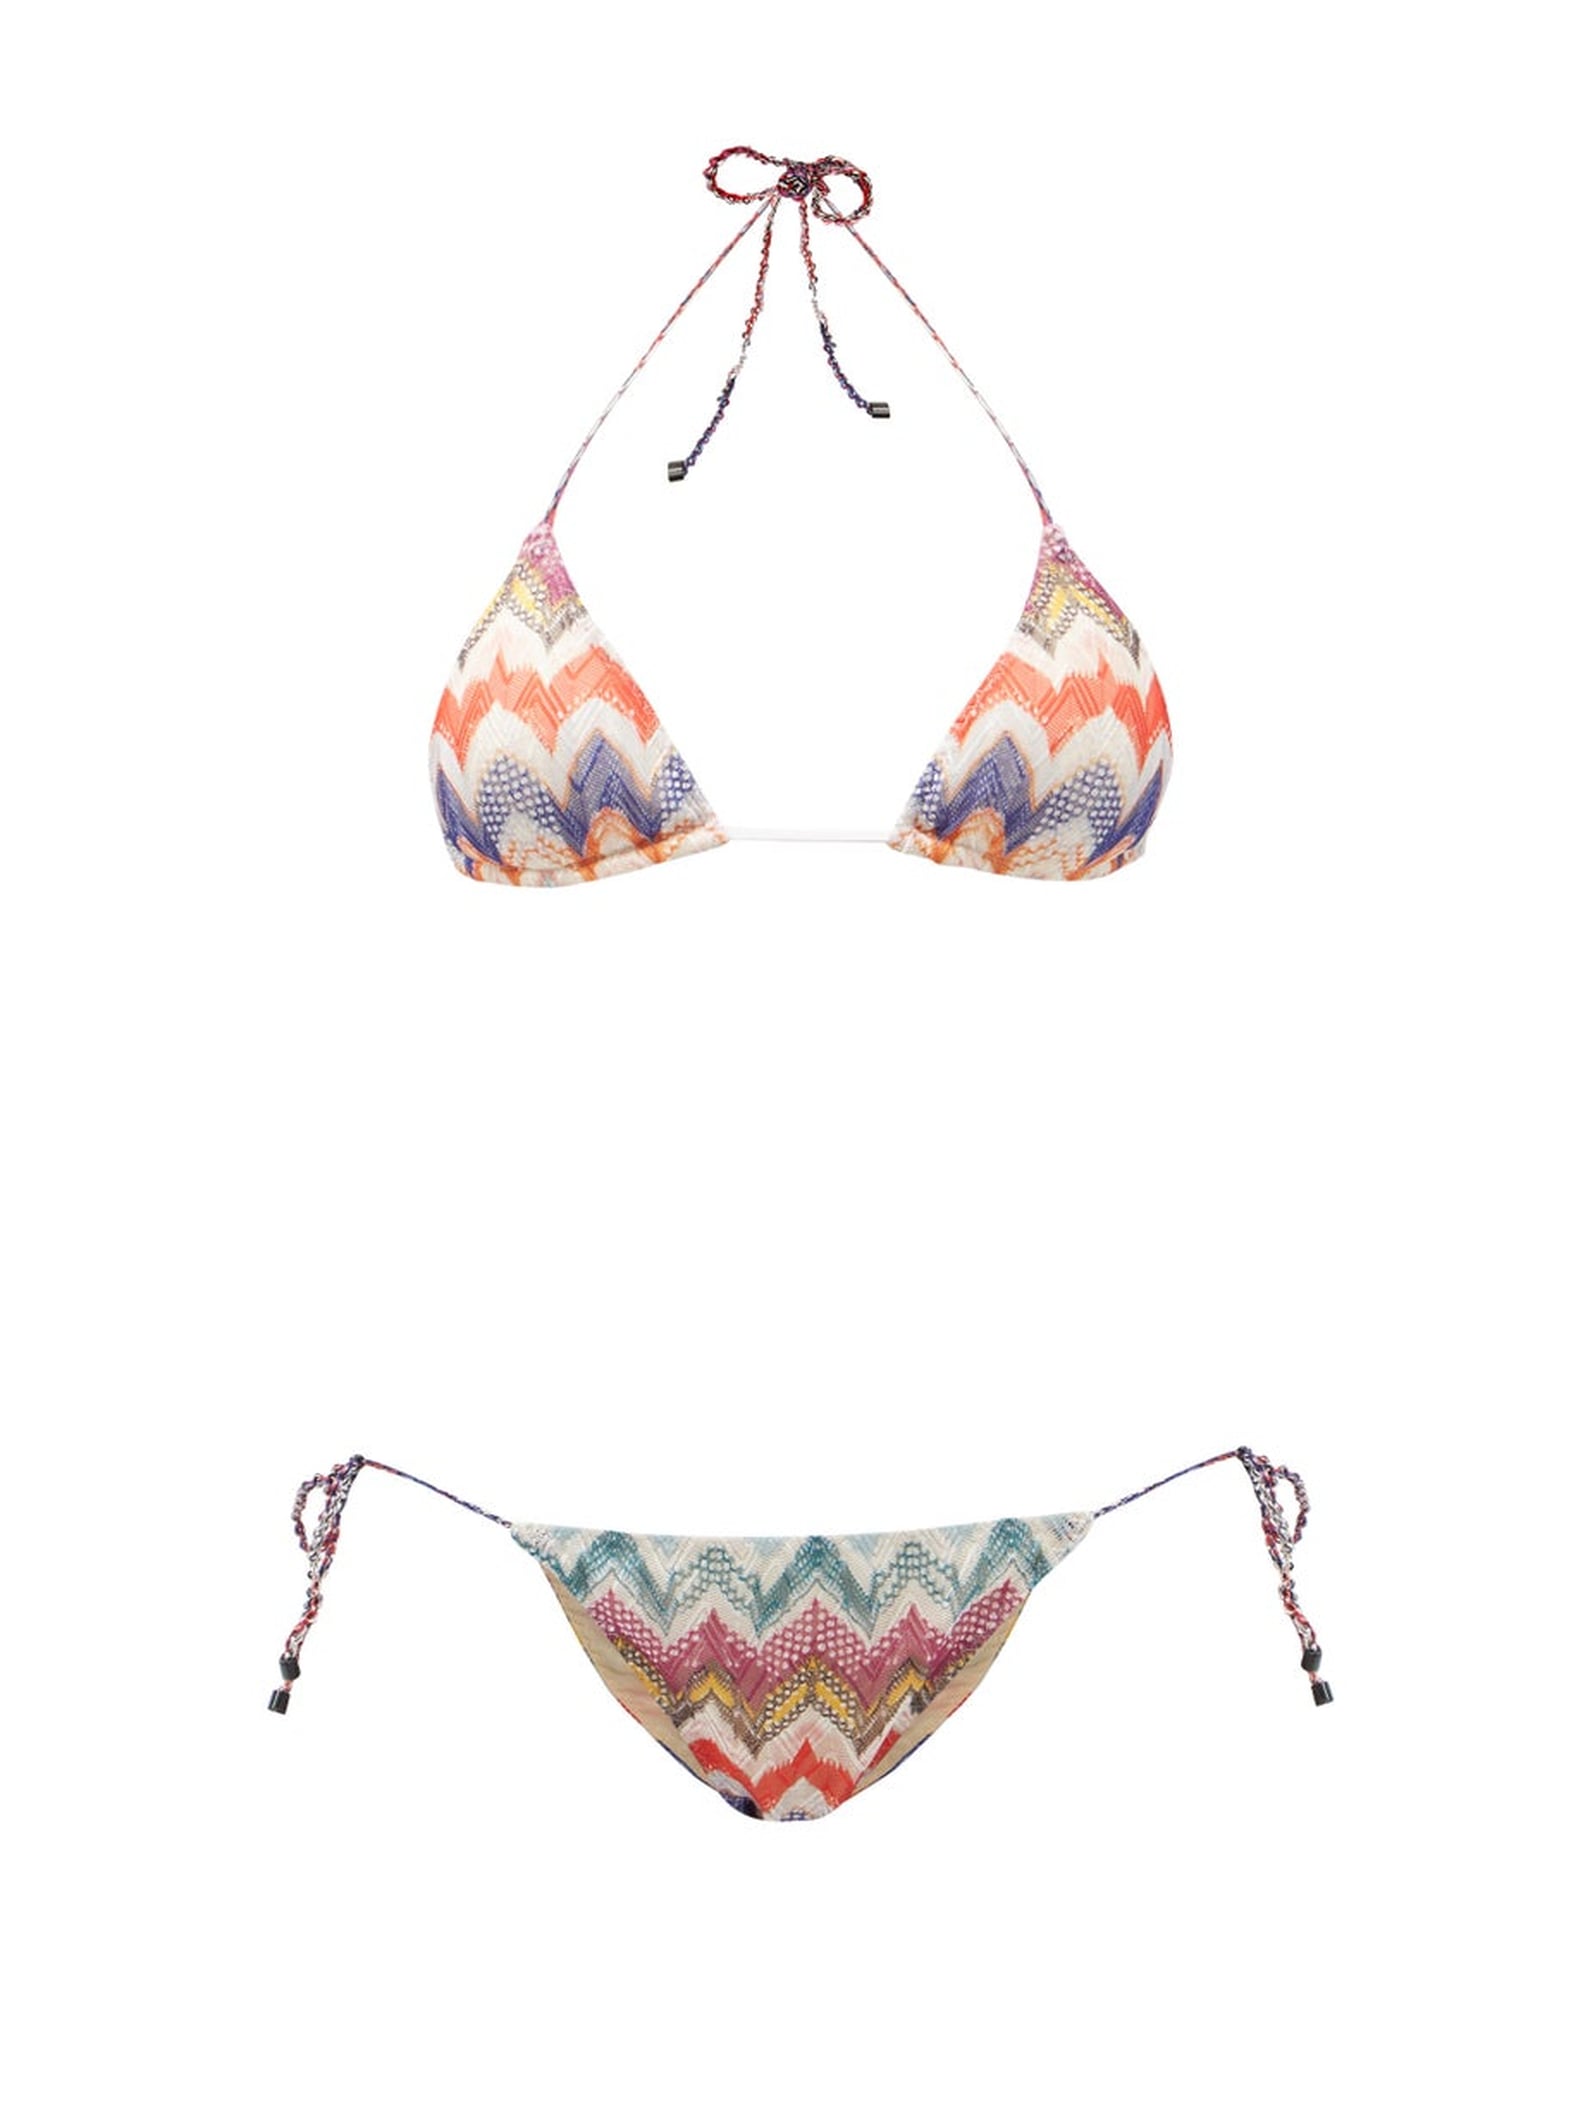 Kylie Jenner and Stormi Wore Matching Rainbow Bikinis | POPSUGAR Fashion